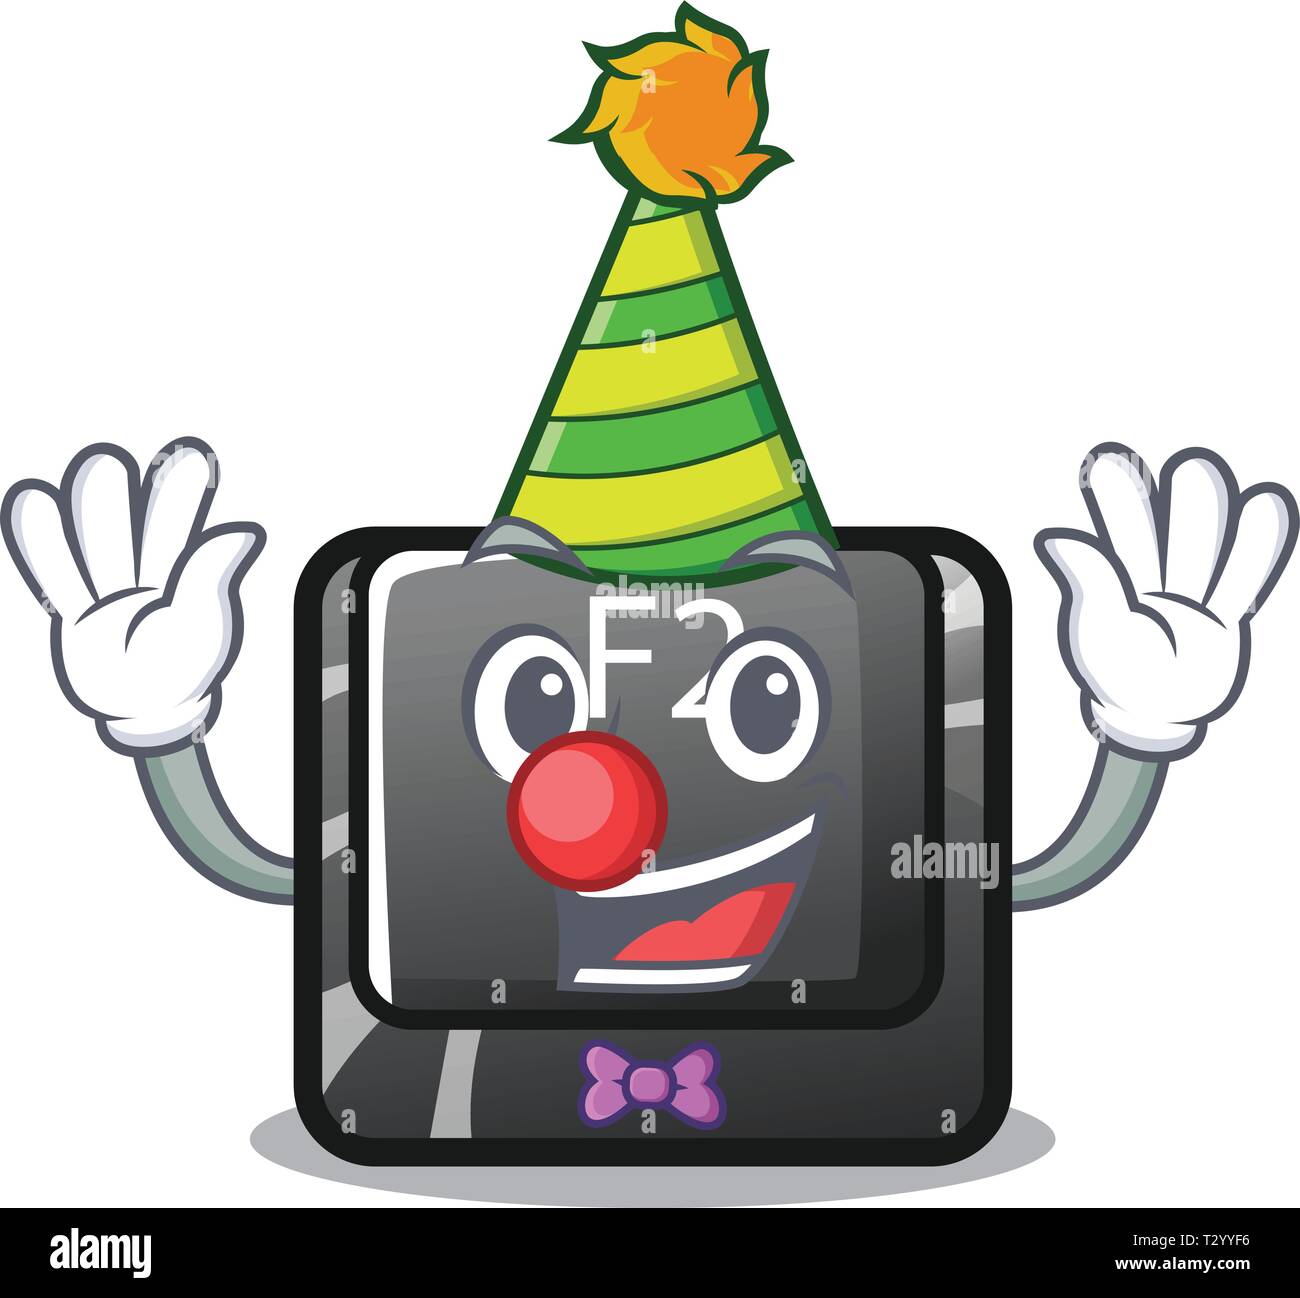 Clown f2 button on the mascot computervector illustration Stock Vector